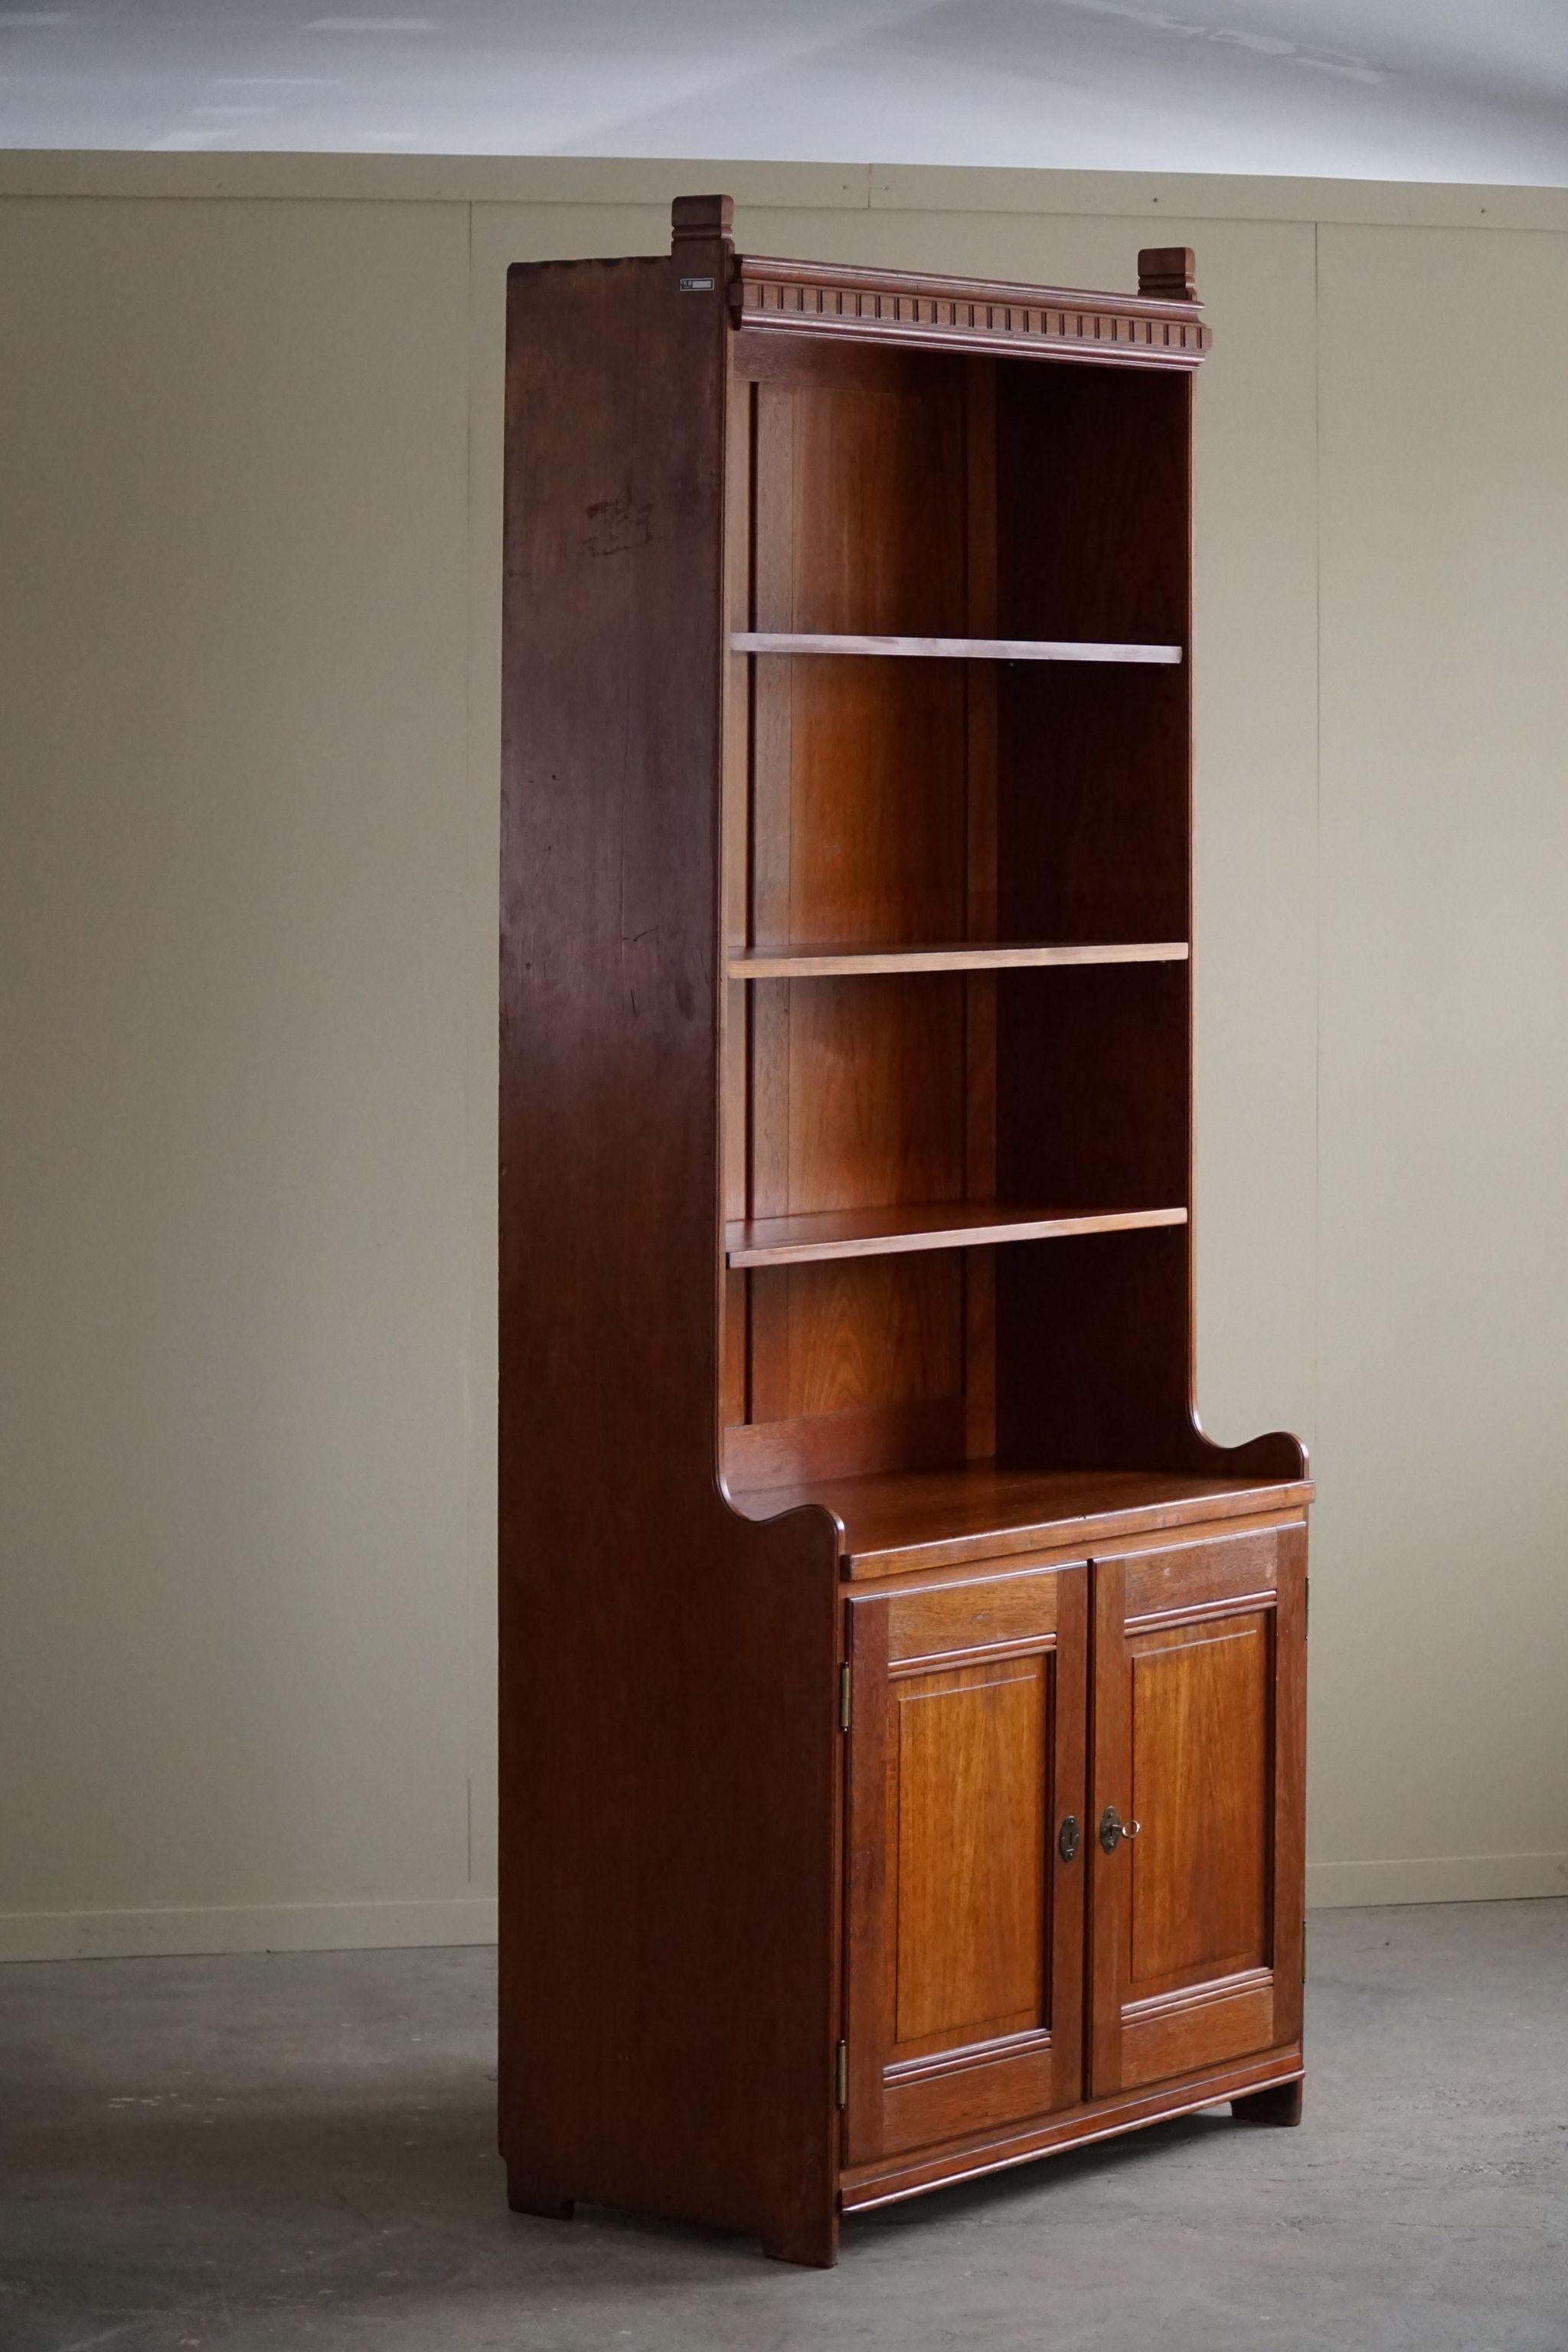 Martin Nyrop Cabinet by Rud. Rasmussen in Teak, Danish Modern, 1900-1920 For Sale 3